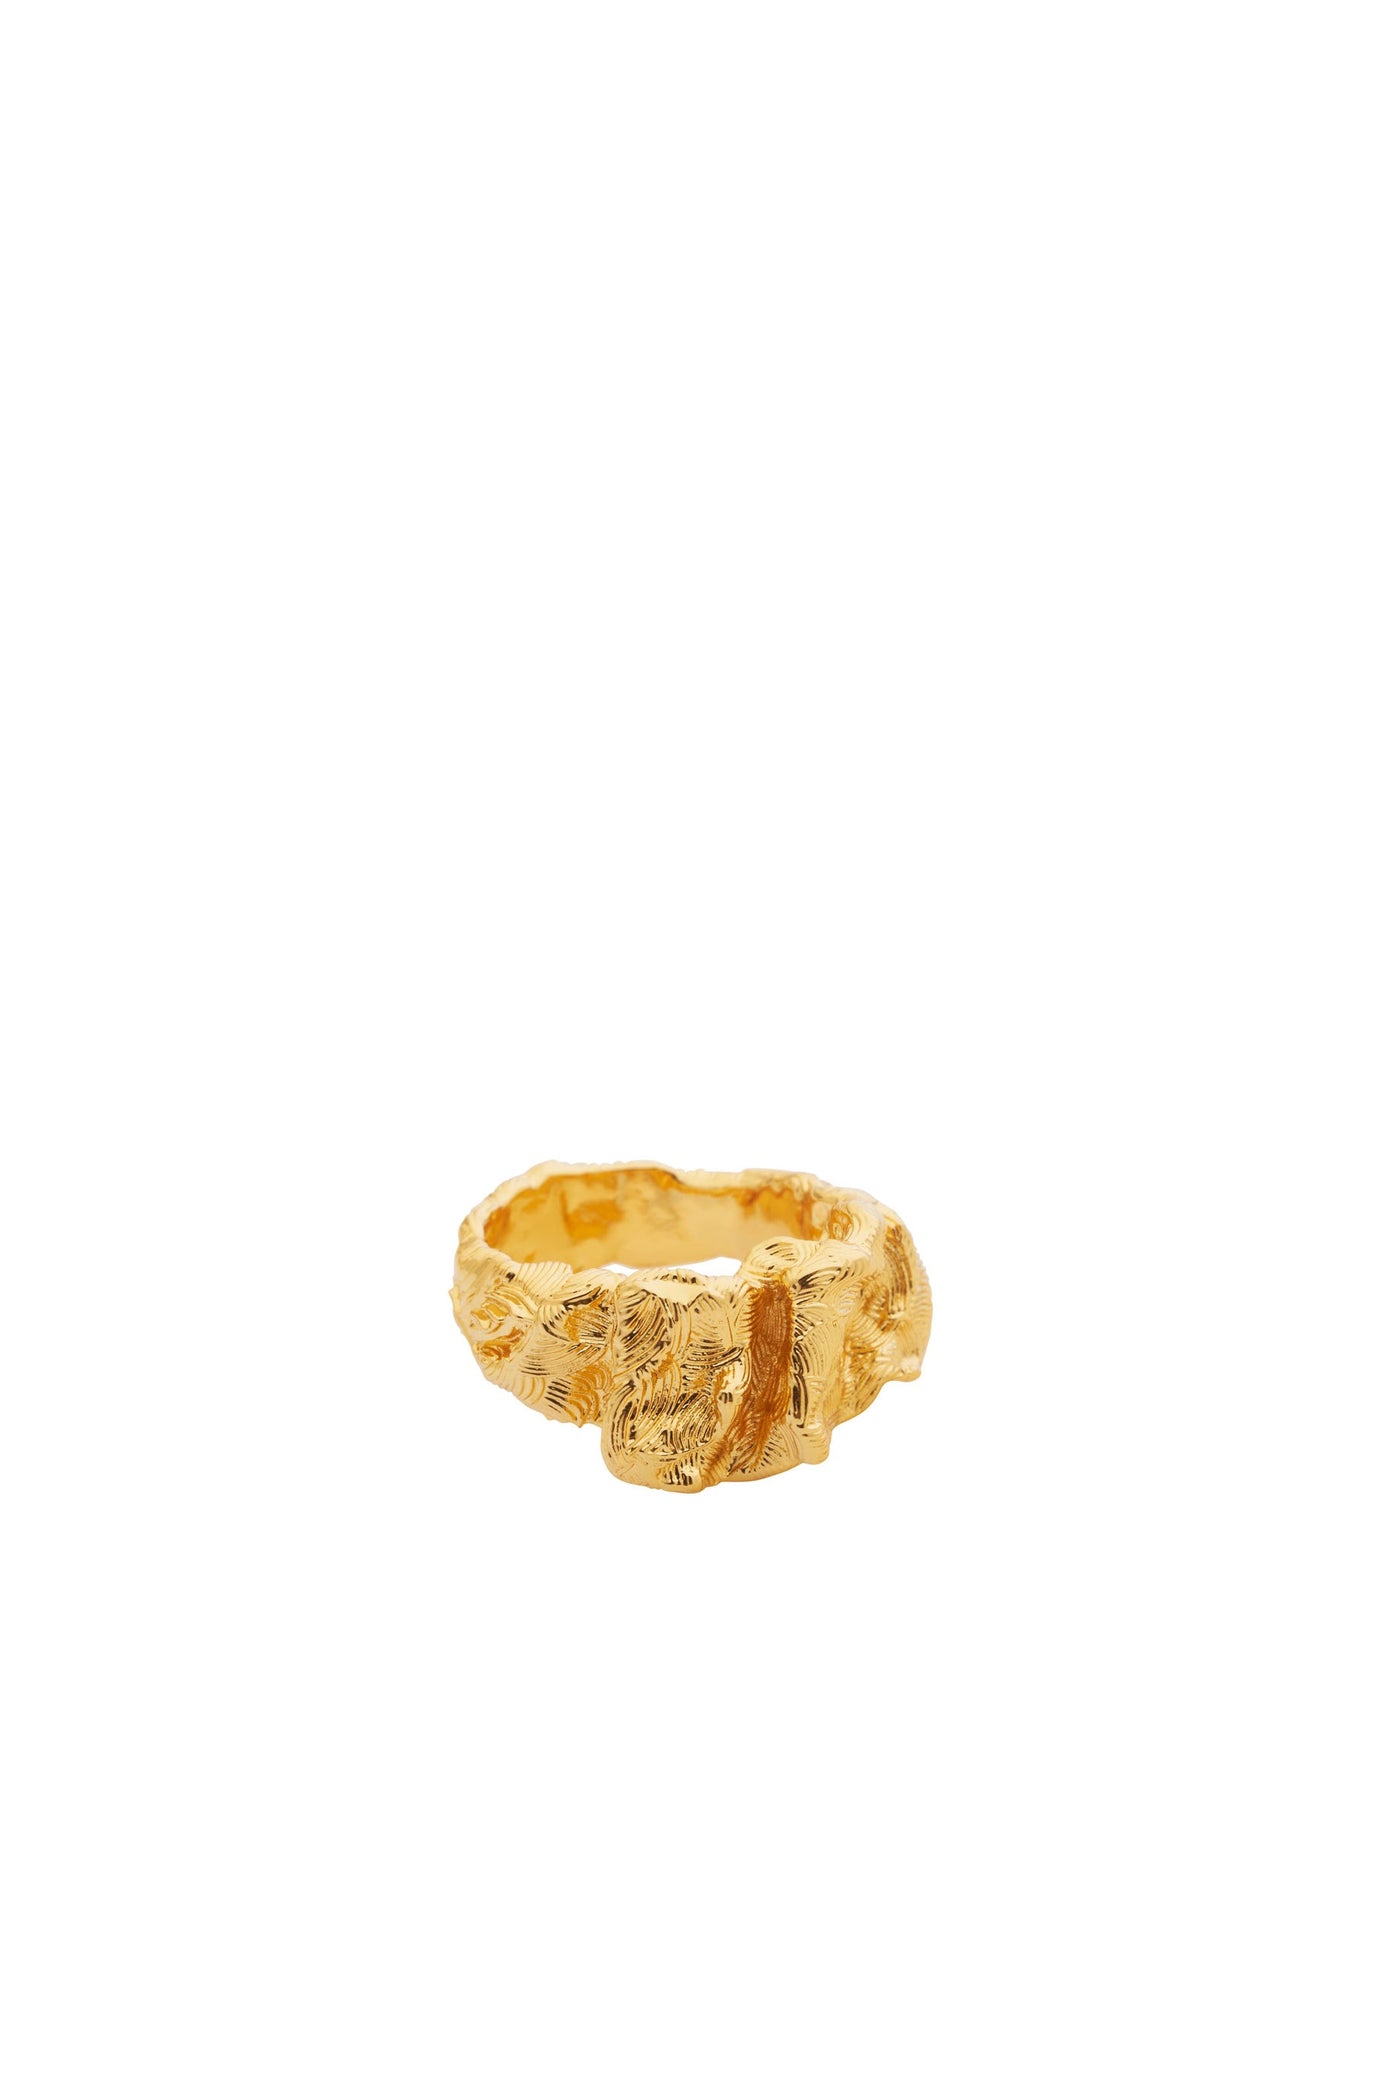 Amber Sceats Fox Ring - Gold